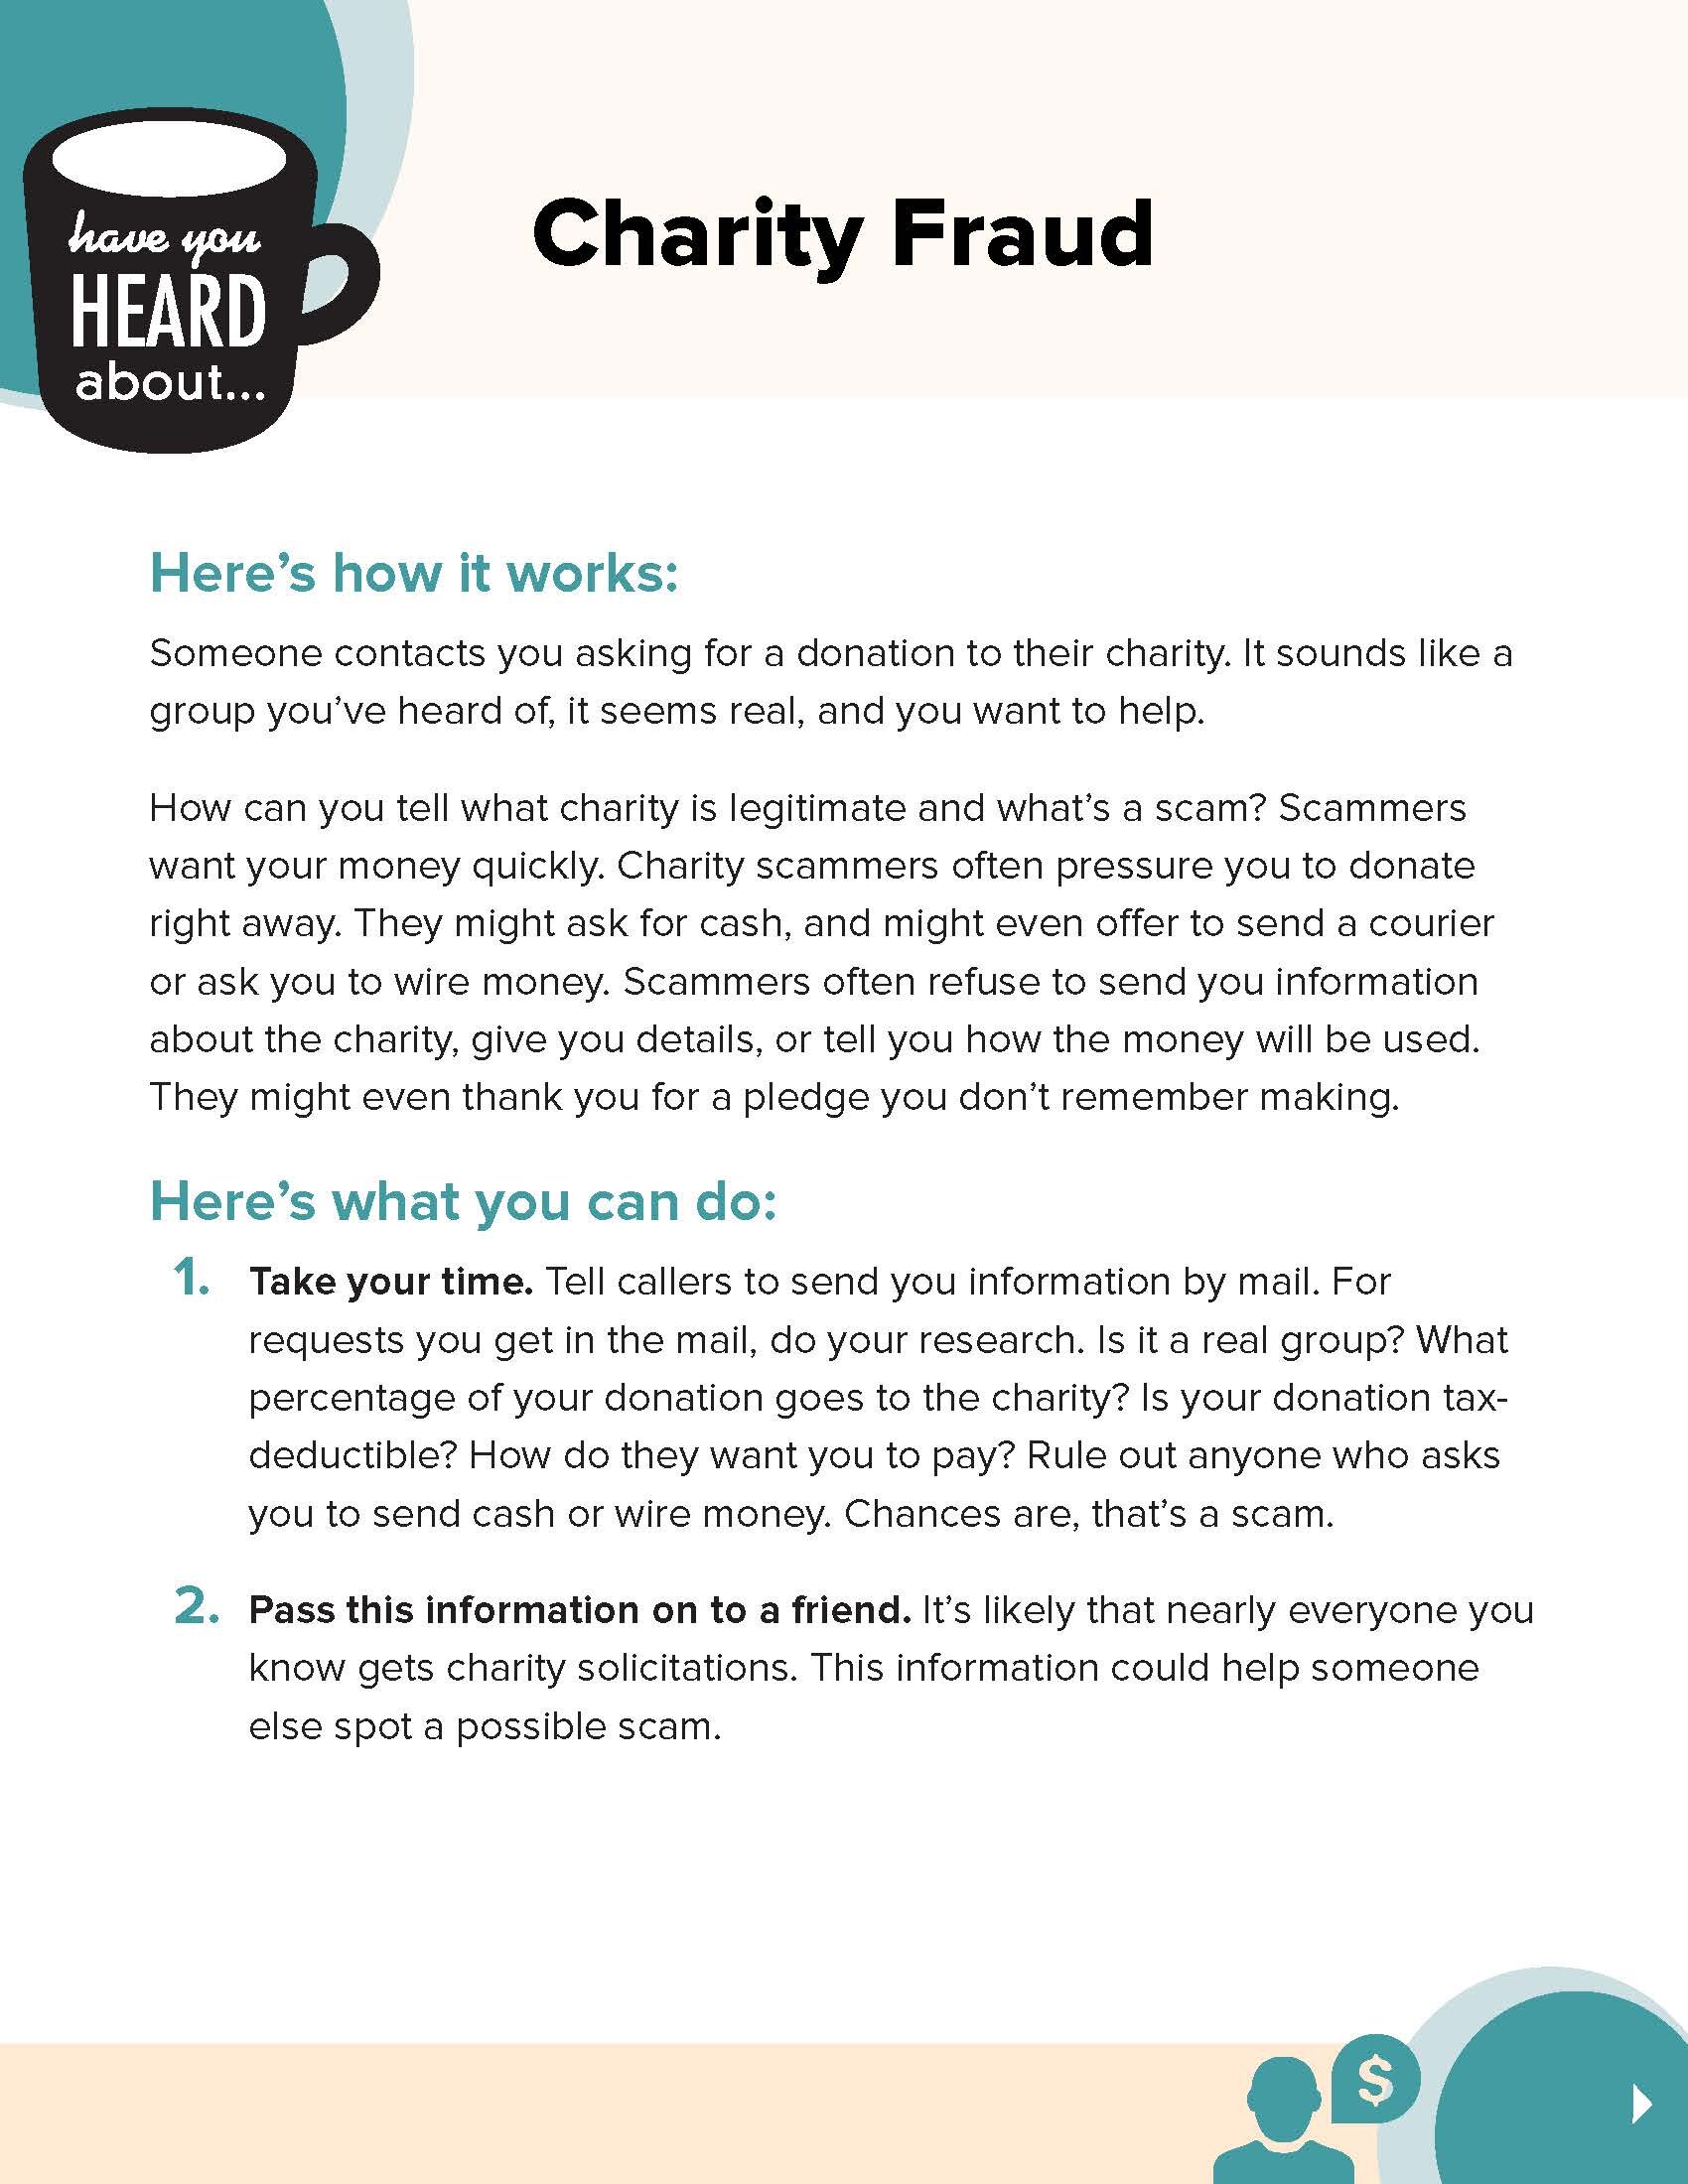 pdf-0182-charity-fraud_Page_1.jpg